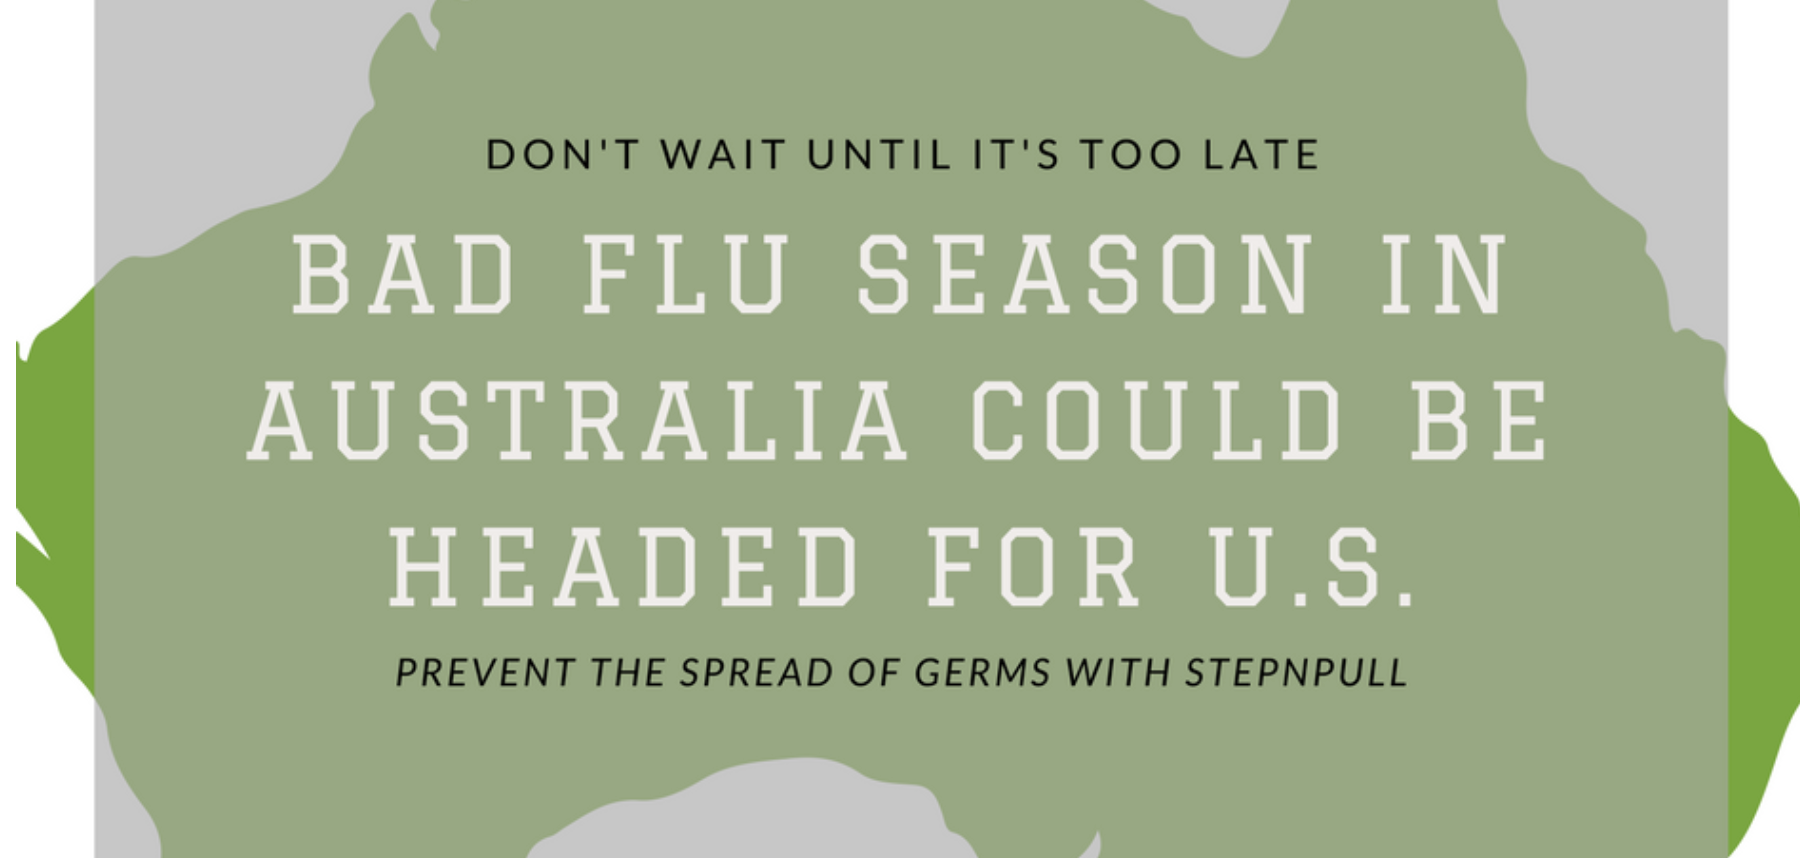 Bad Flu Season In Australia Could Be Headed For U.S.